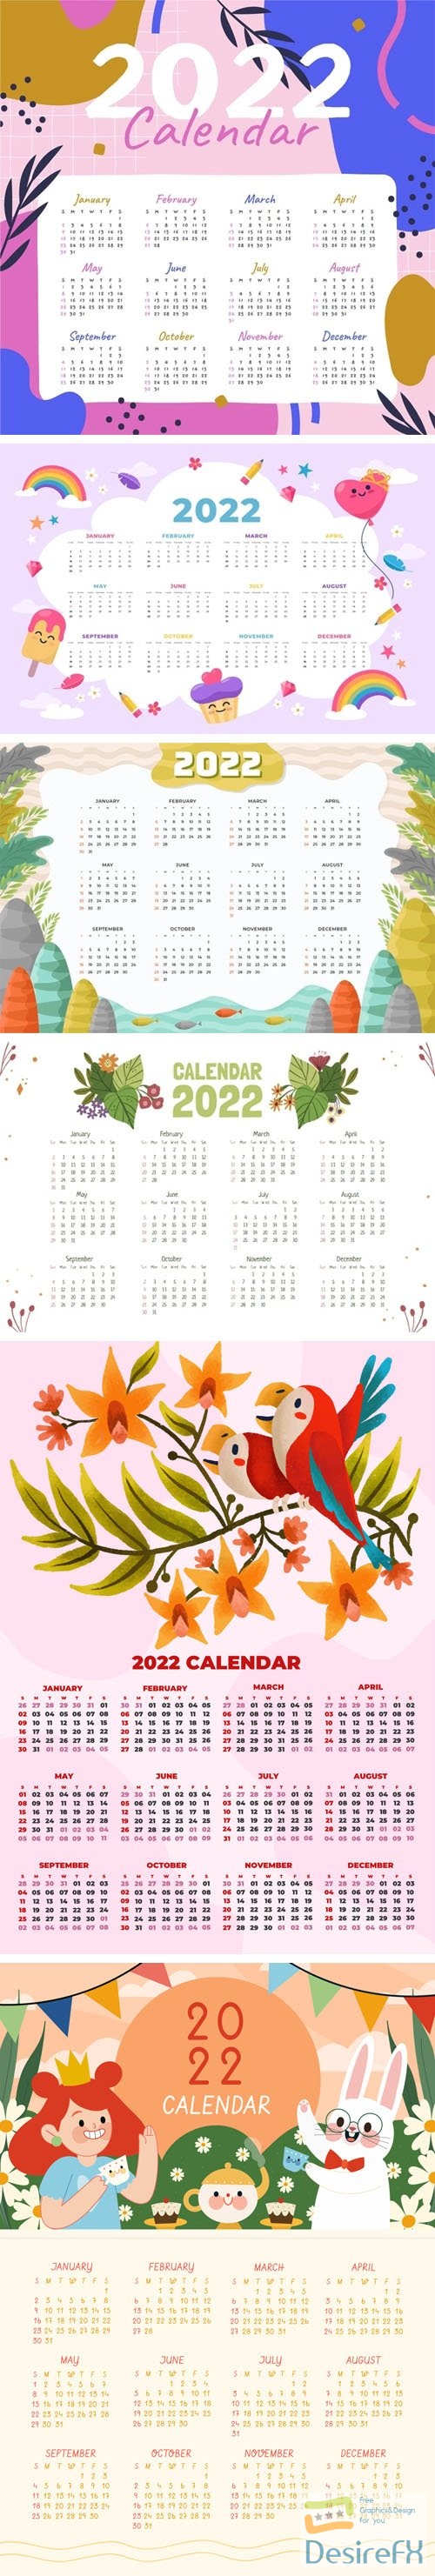 Watercolor Hand Drawn 2022 Calendars Collection - 6 Vector Templates